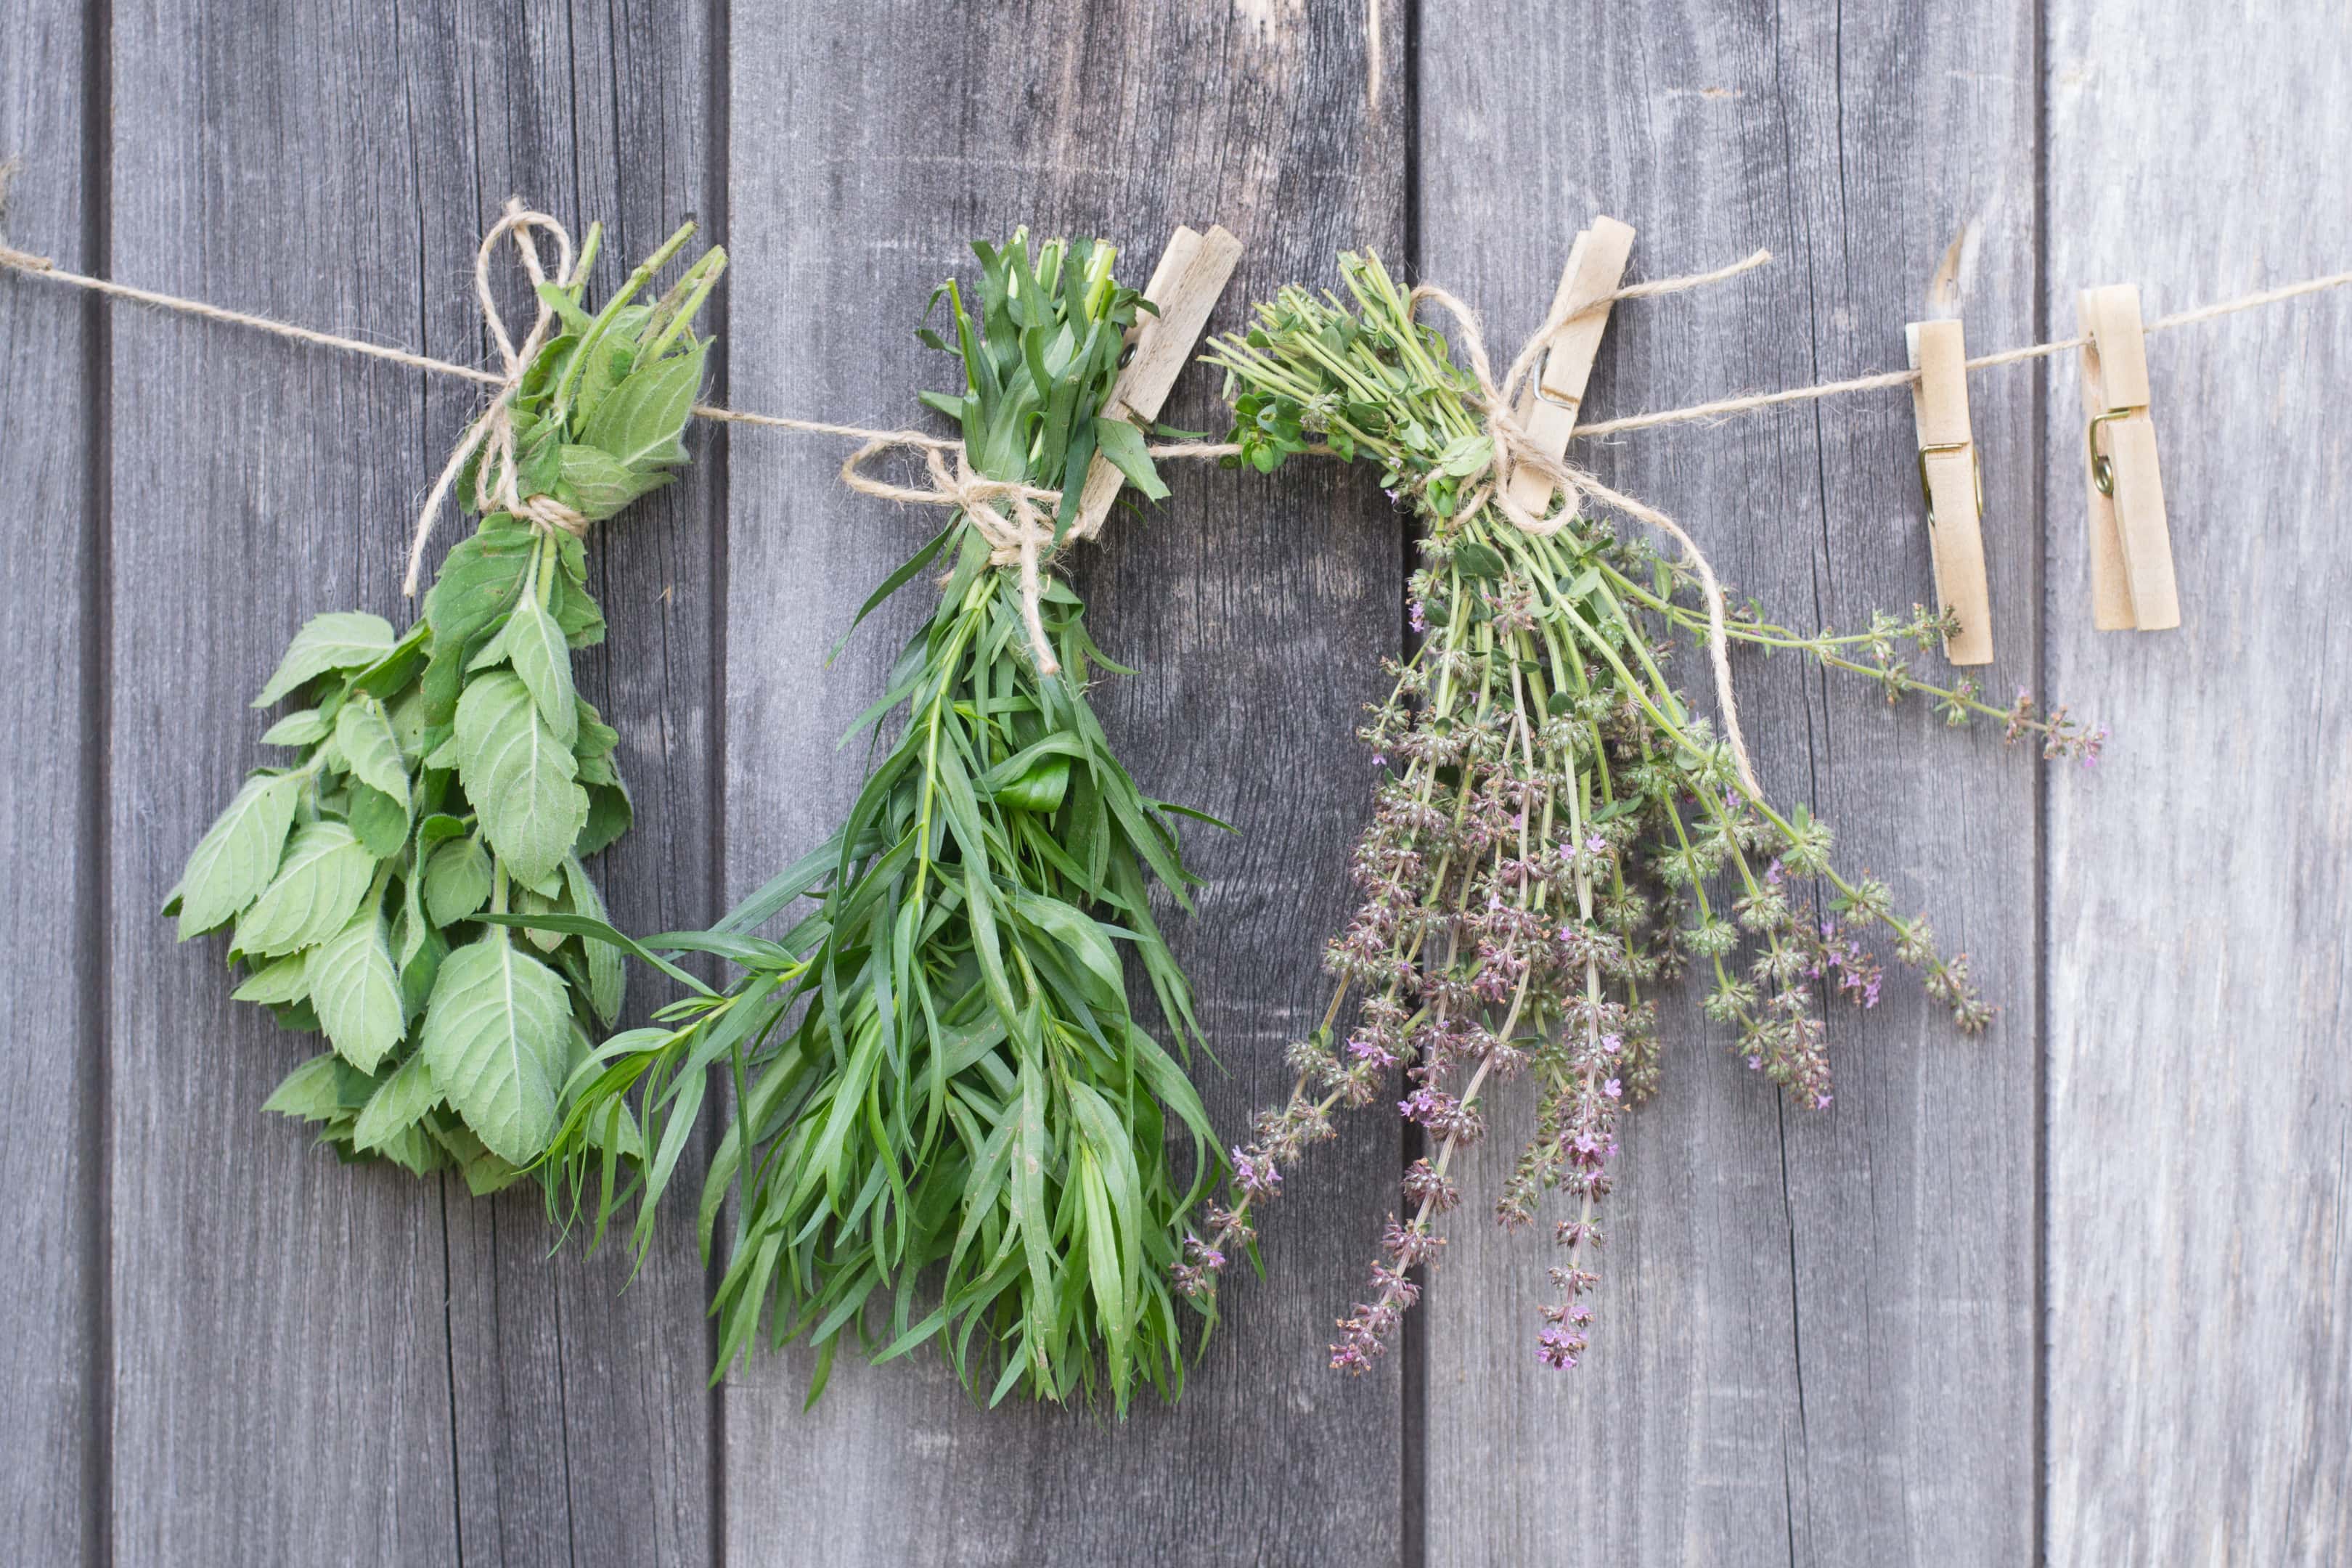 Basil and tarragon herbs hang to dry